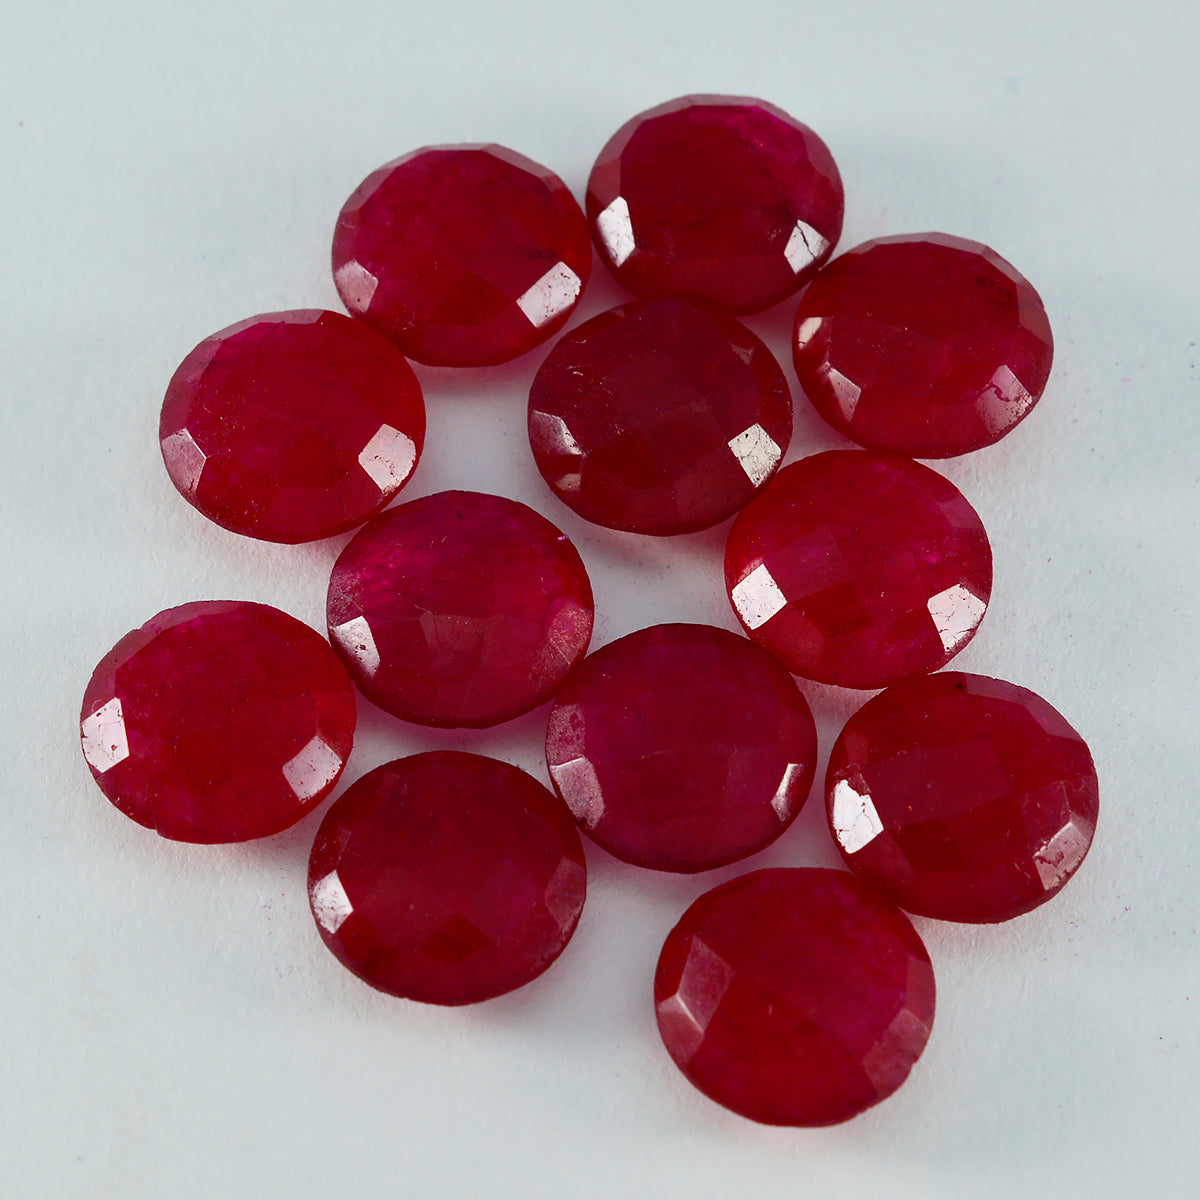 riyogems 1 шт. настоящая красная яшма ограненная 11x11 мм круглая форма качественный сыпучий драгоценный камень